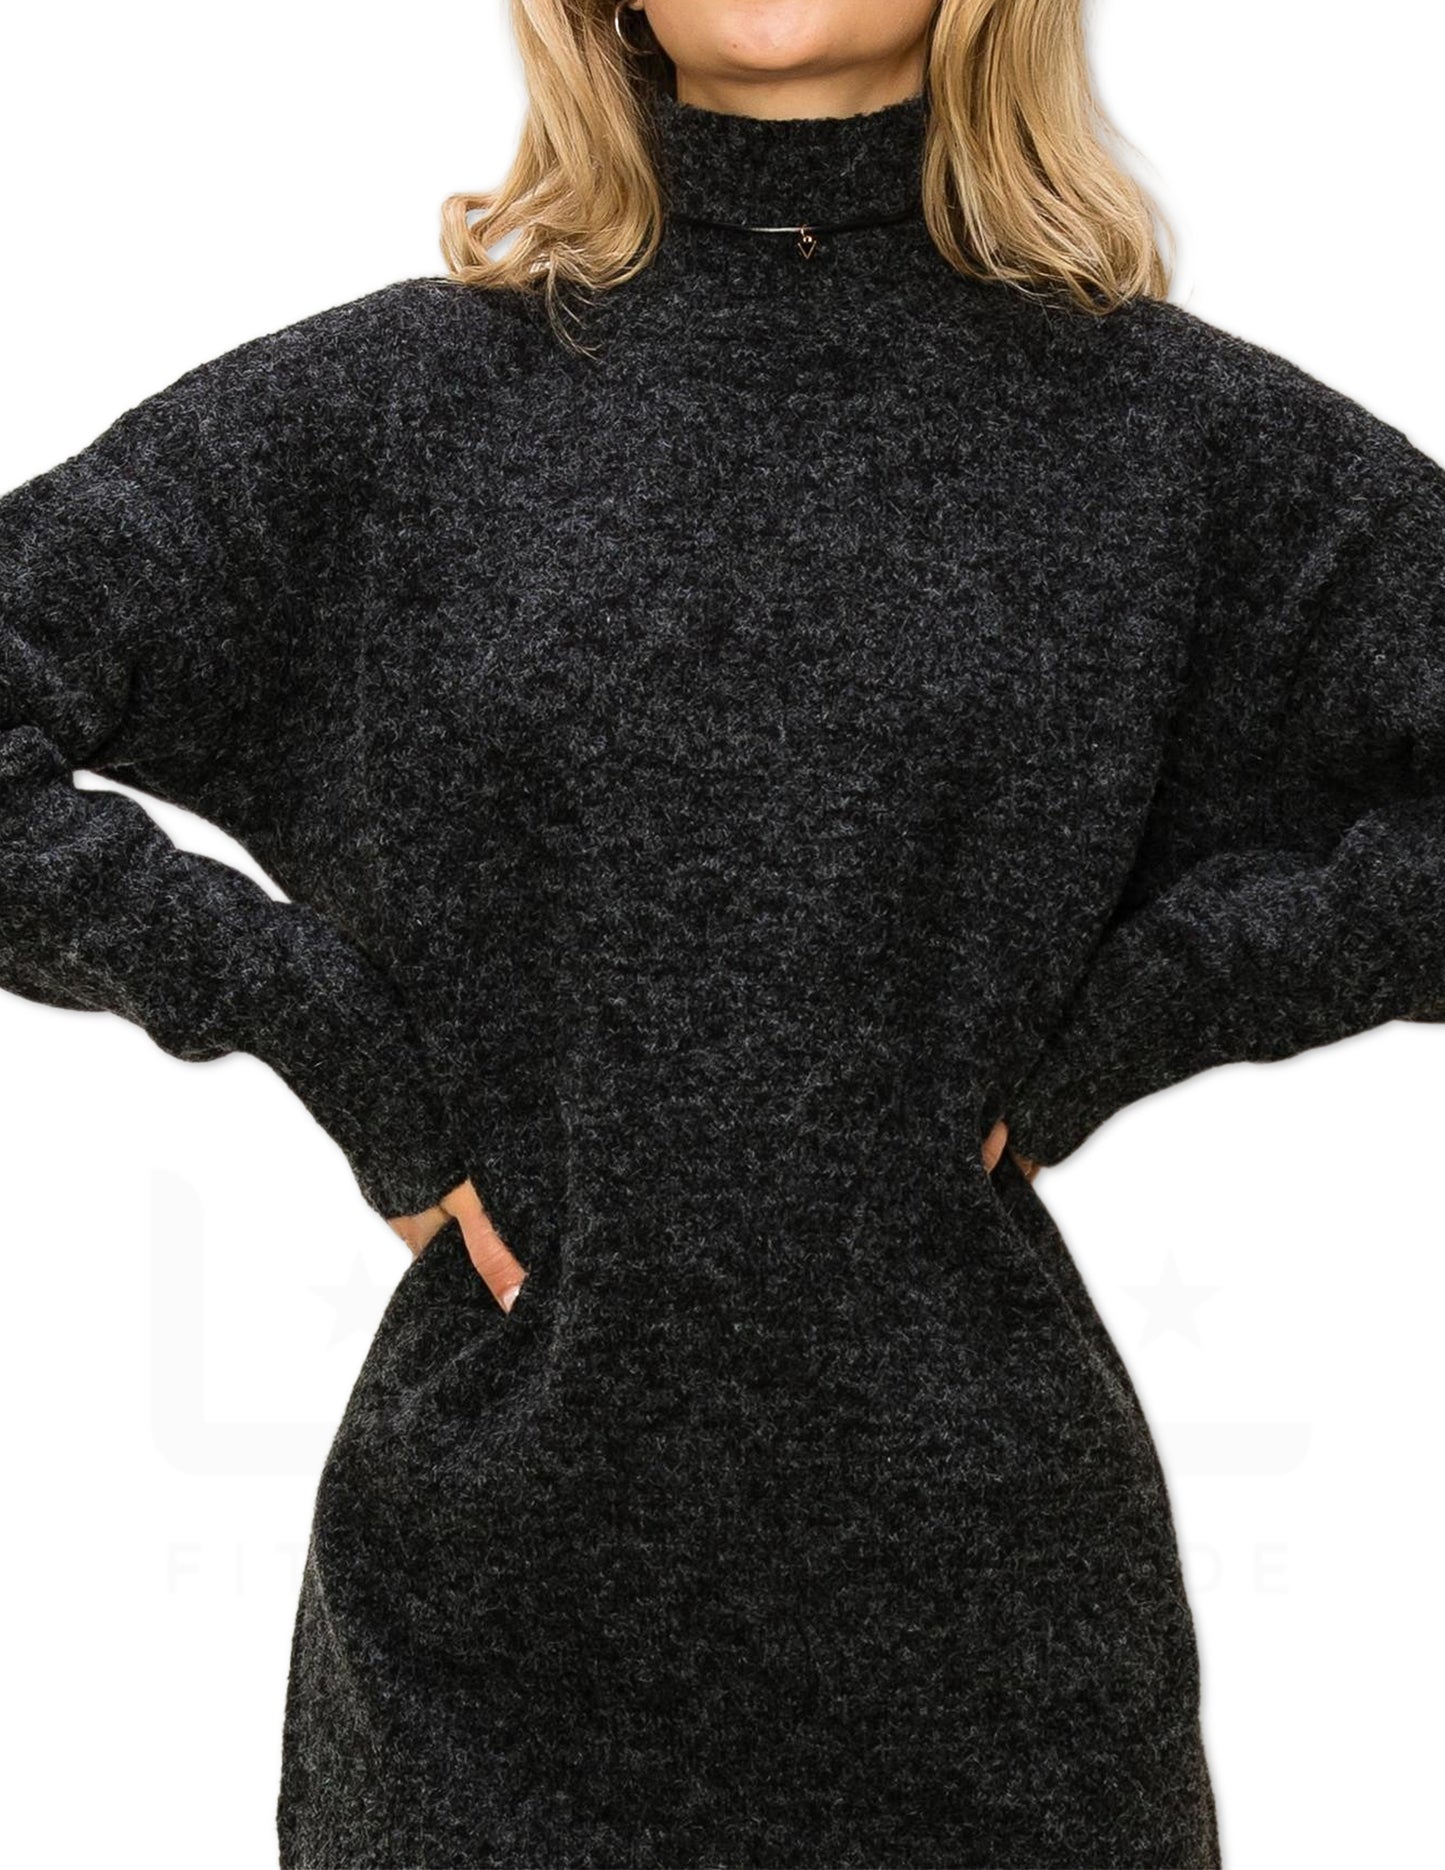 High Neck Sweater Dress - Black